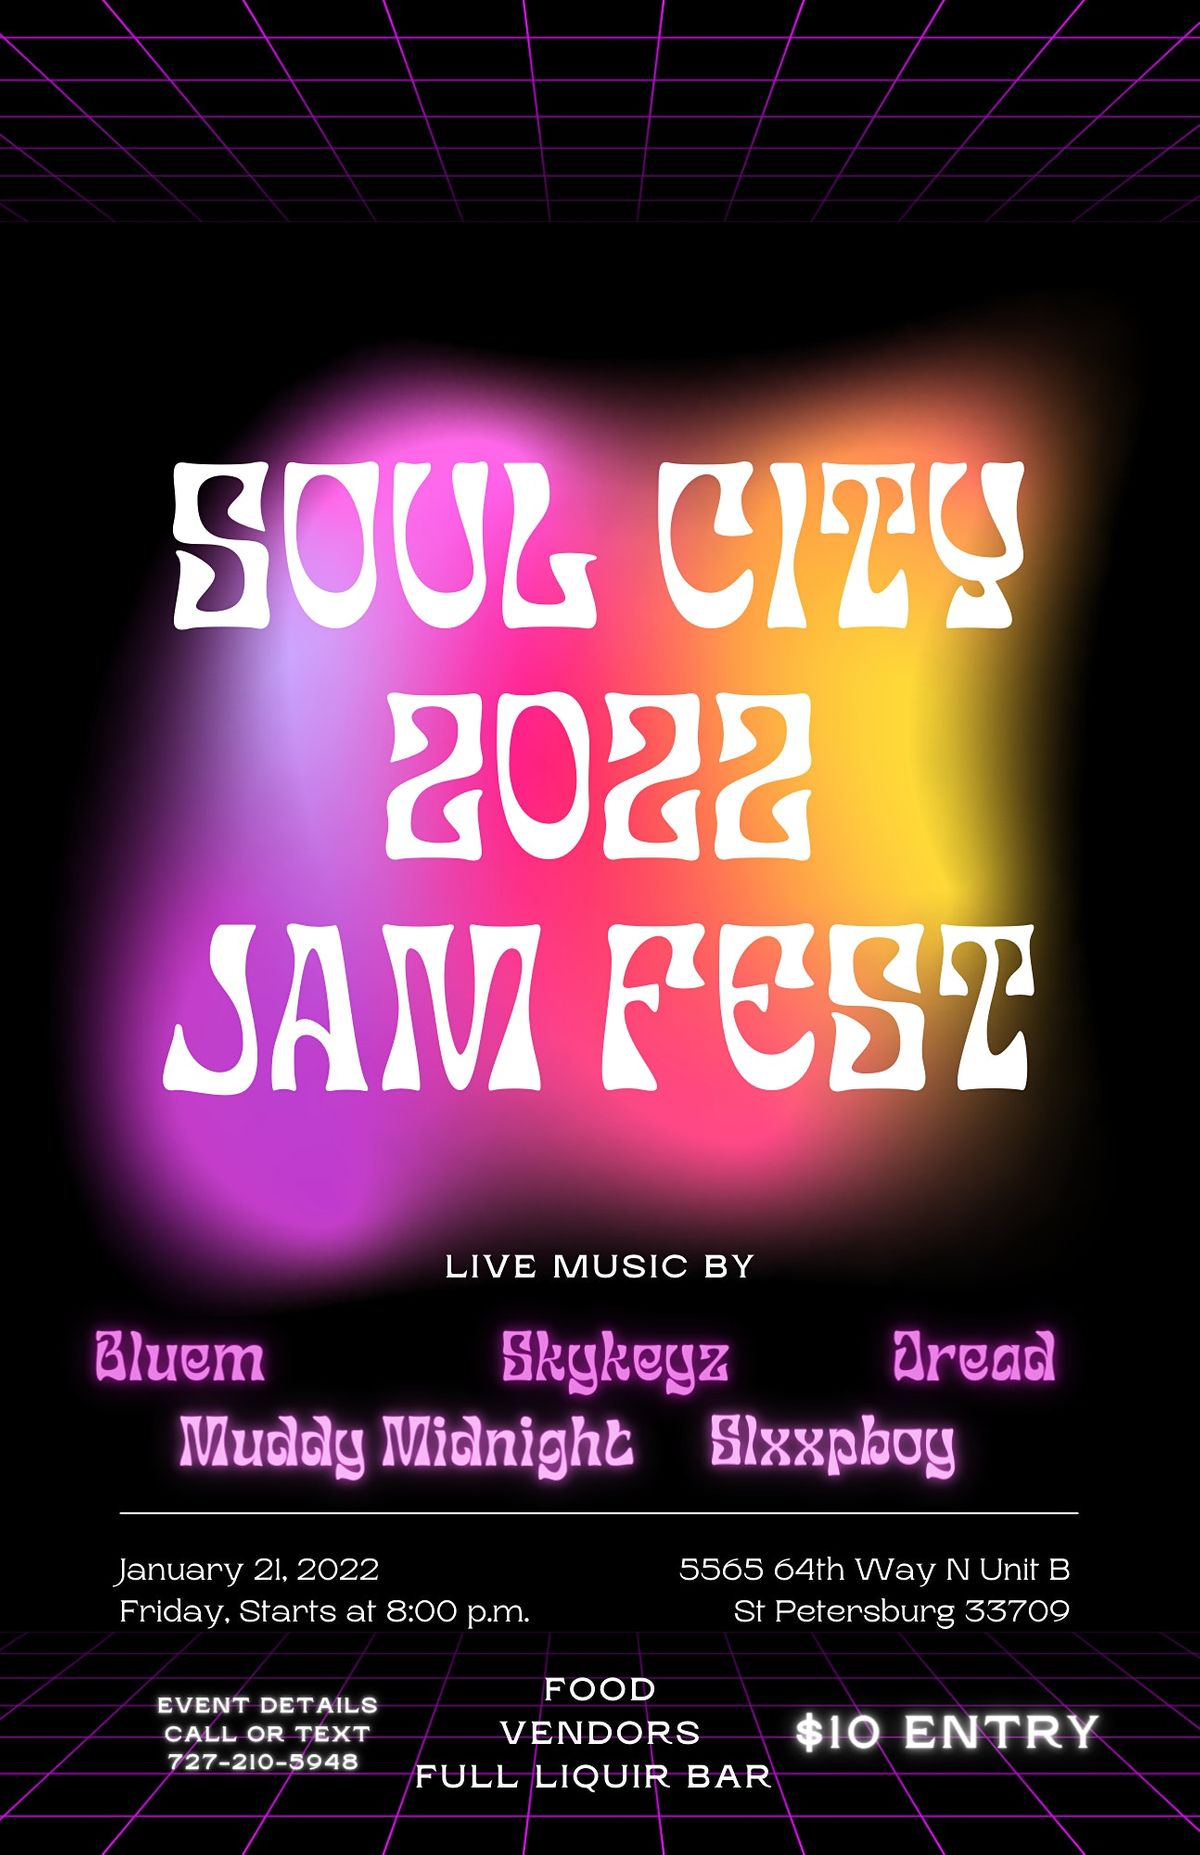 Soul City 2022 Jam Fest